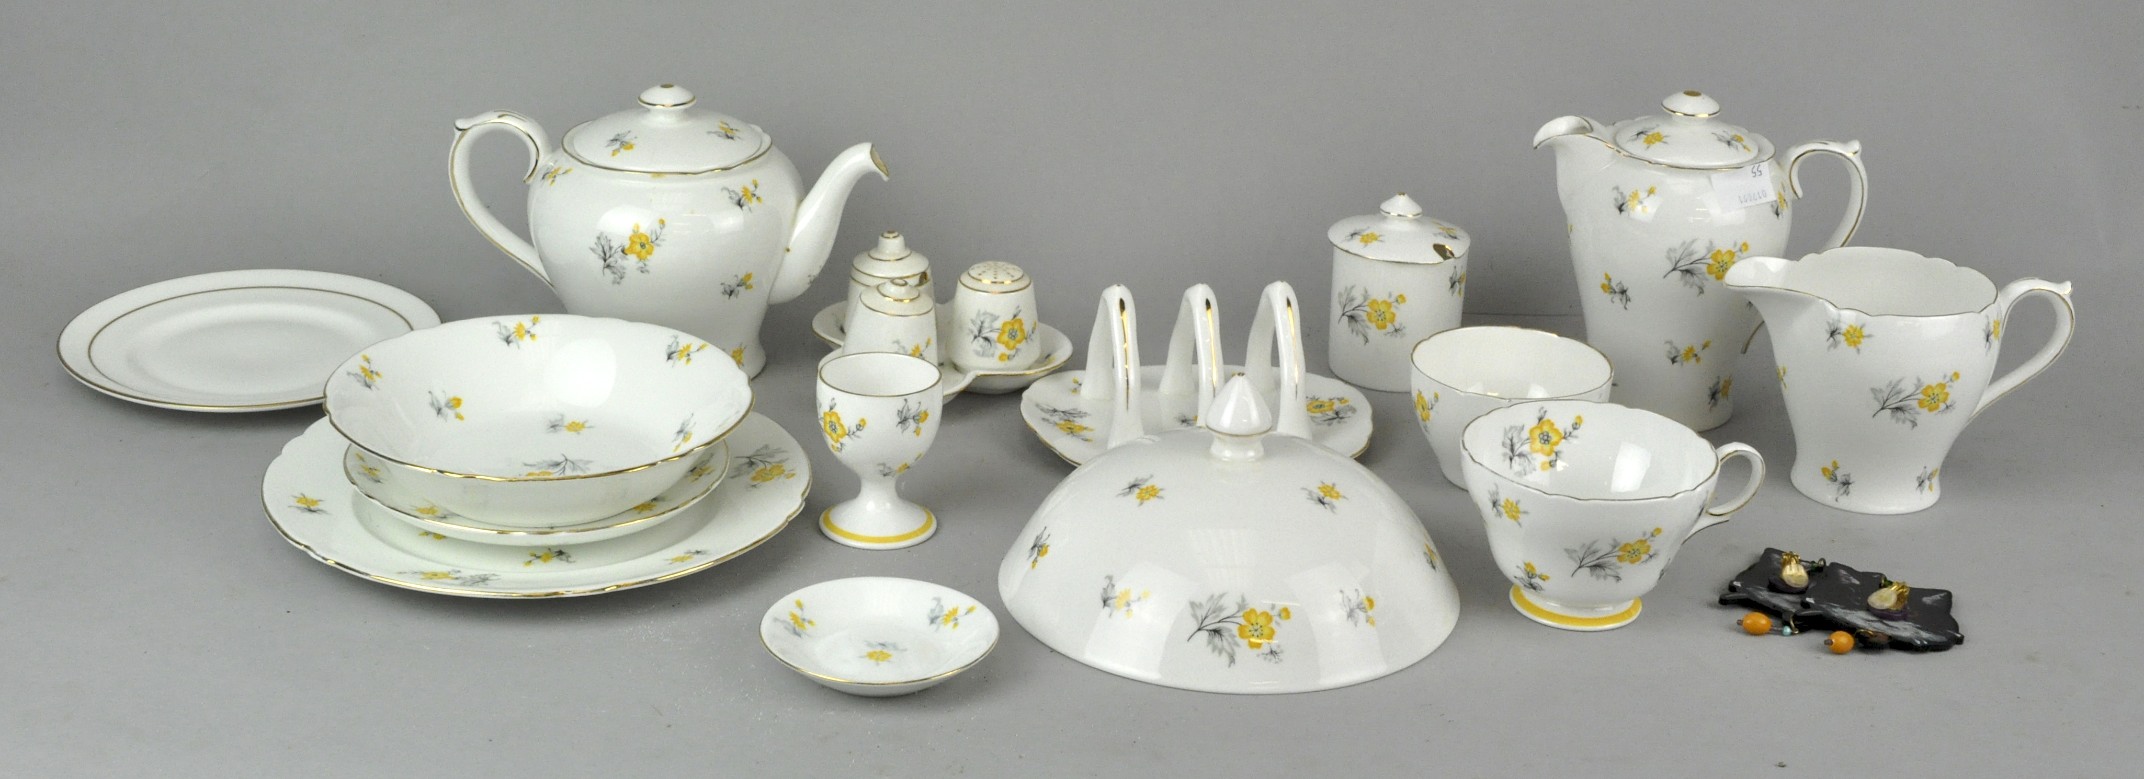 A 'Shelly Charm' tea set to include; toast rack teapot, cruet set, plates, cups and more.